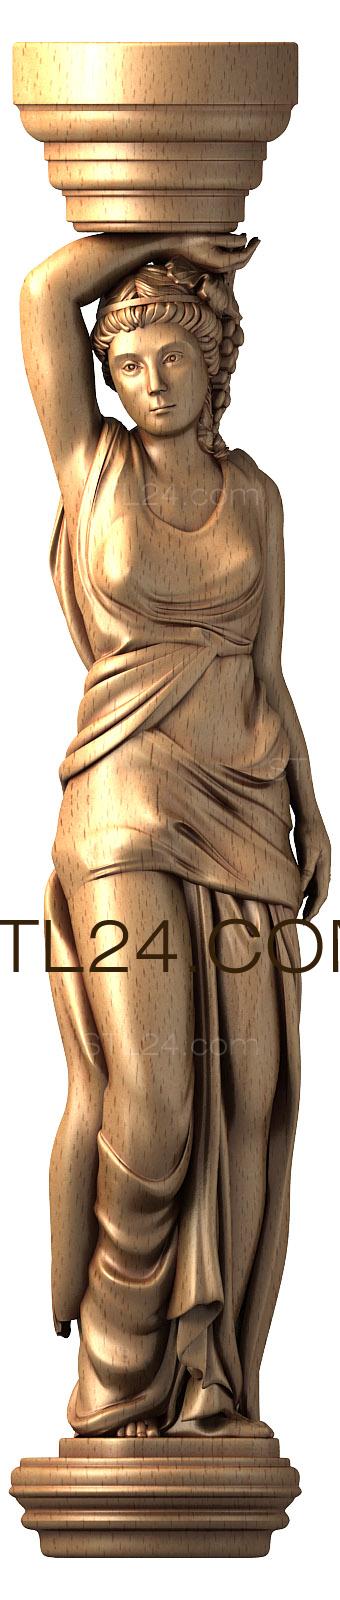 Statuette (STK_0025) 3D models for cnc